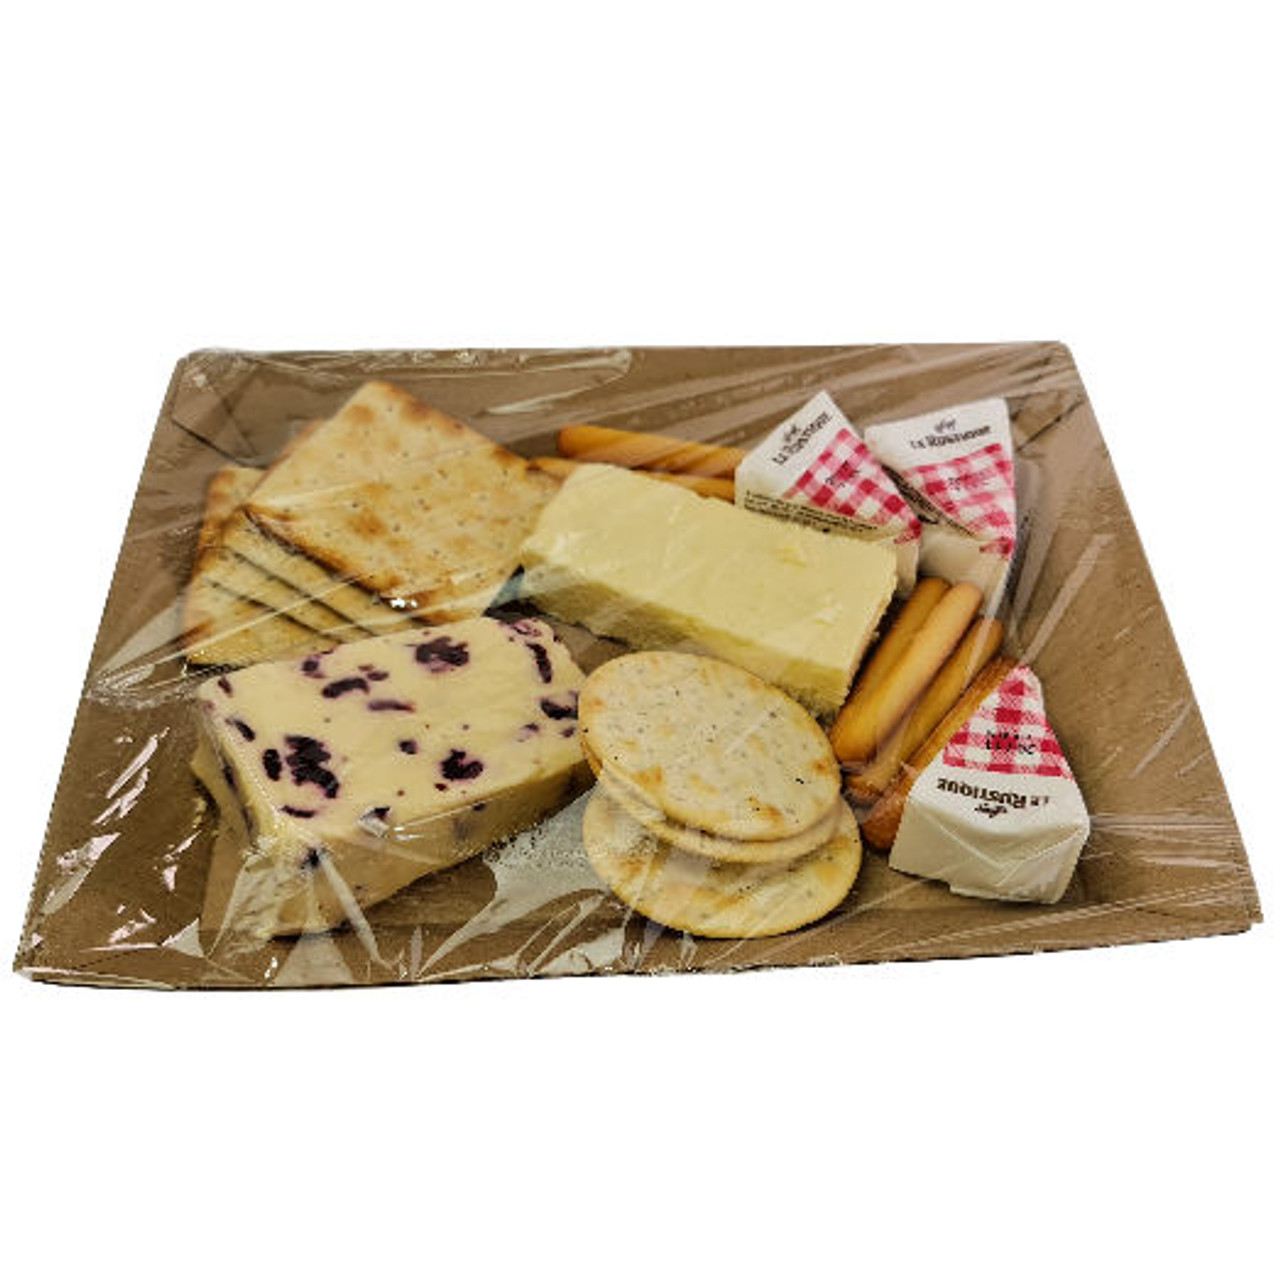 Small Cardboard Cheese board platter 265 x 200 x 40mm ( see qty options )